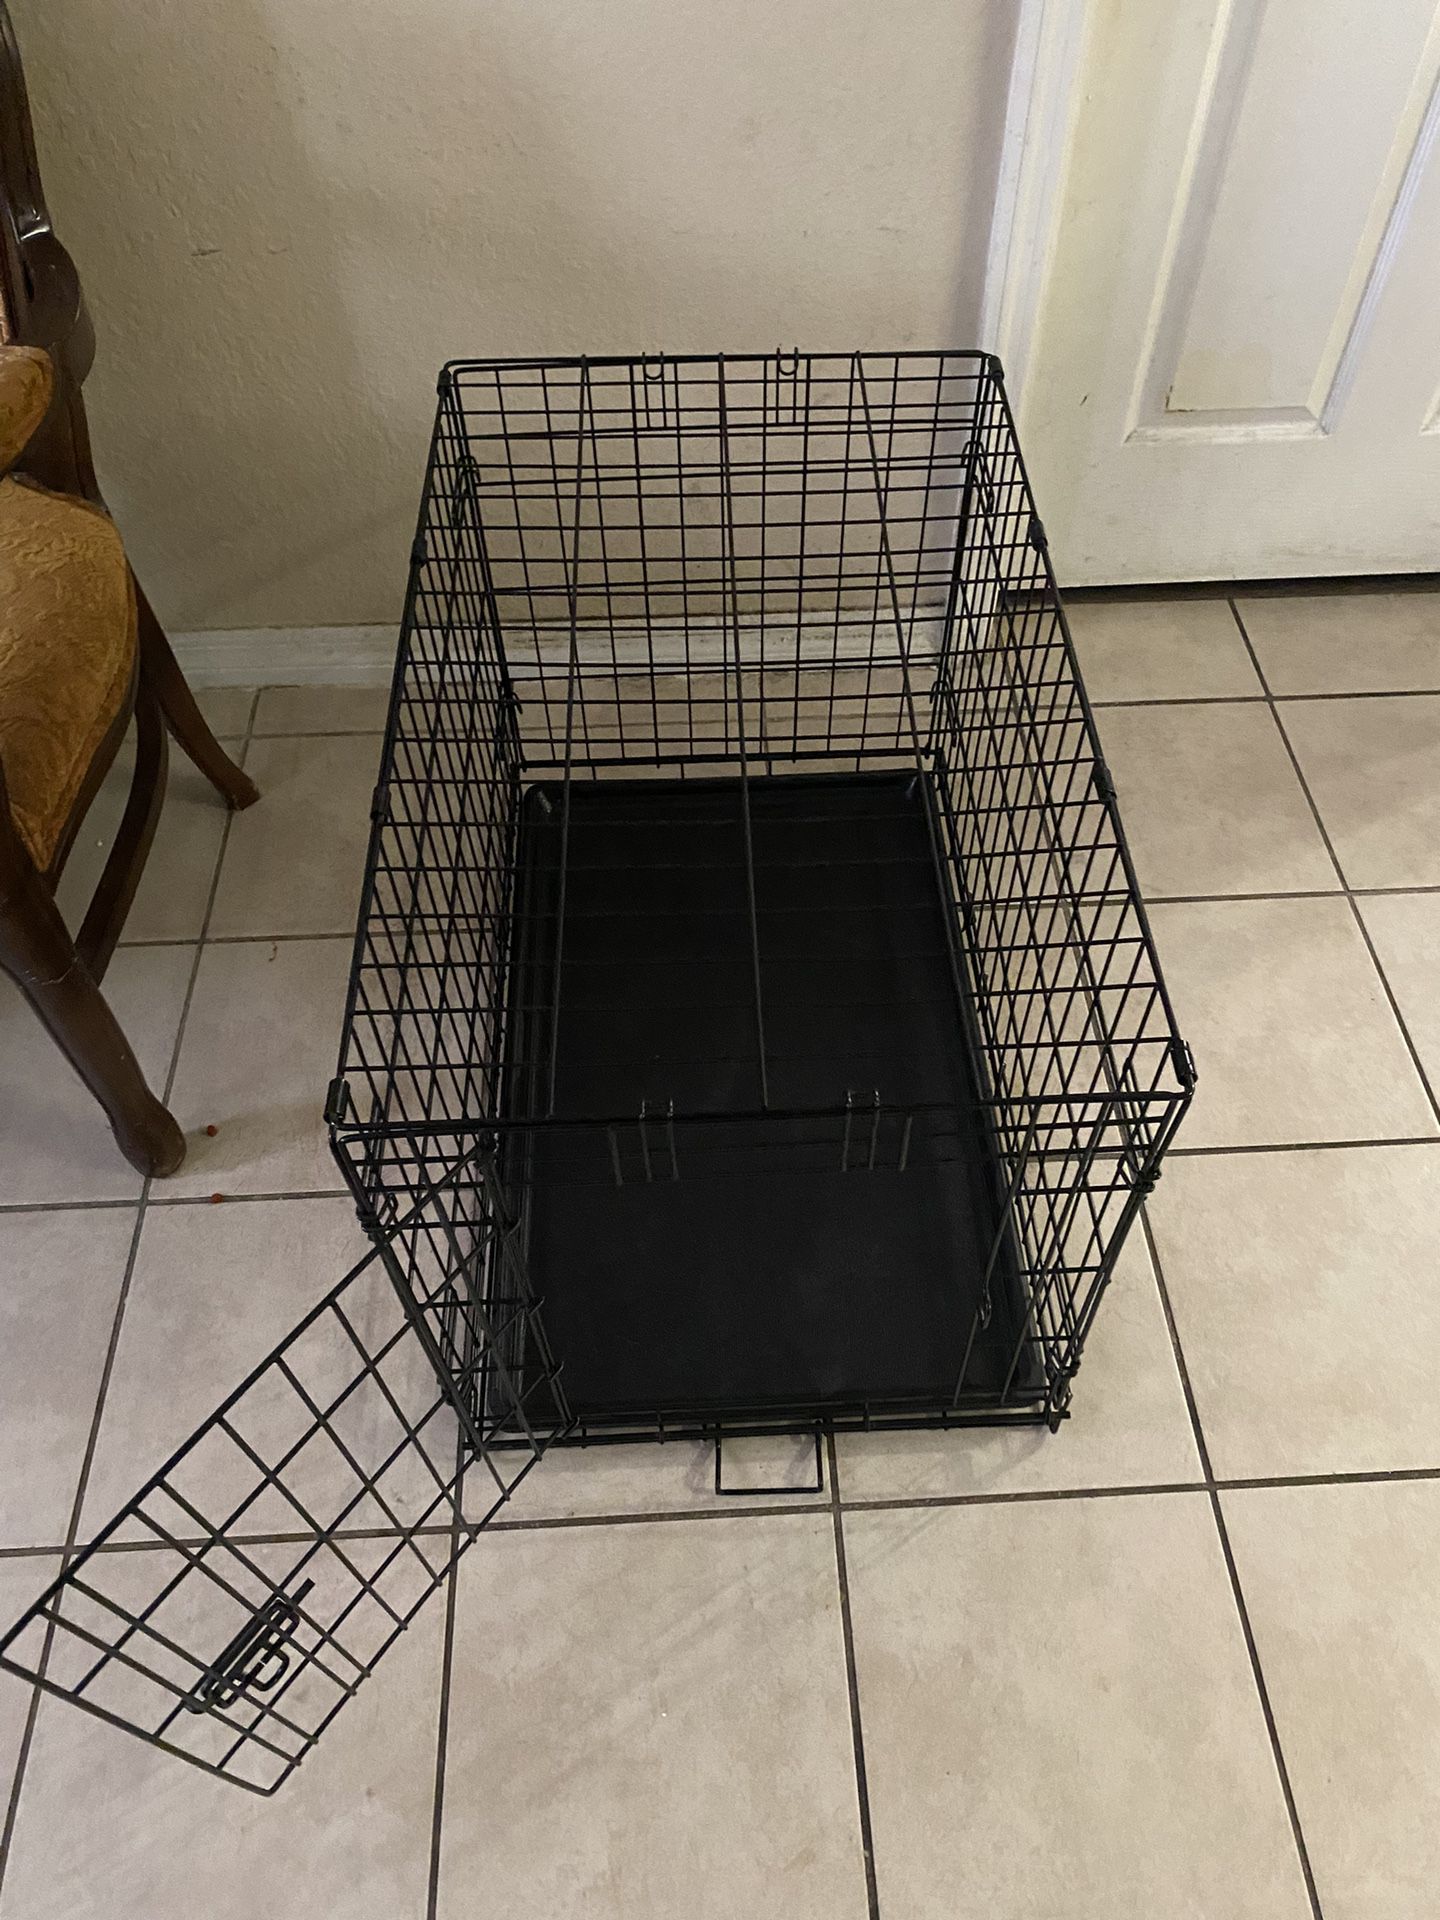 30 Inch Dog Crate 